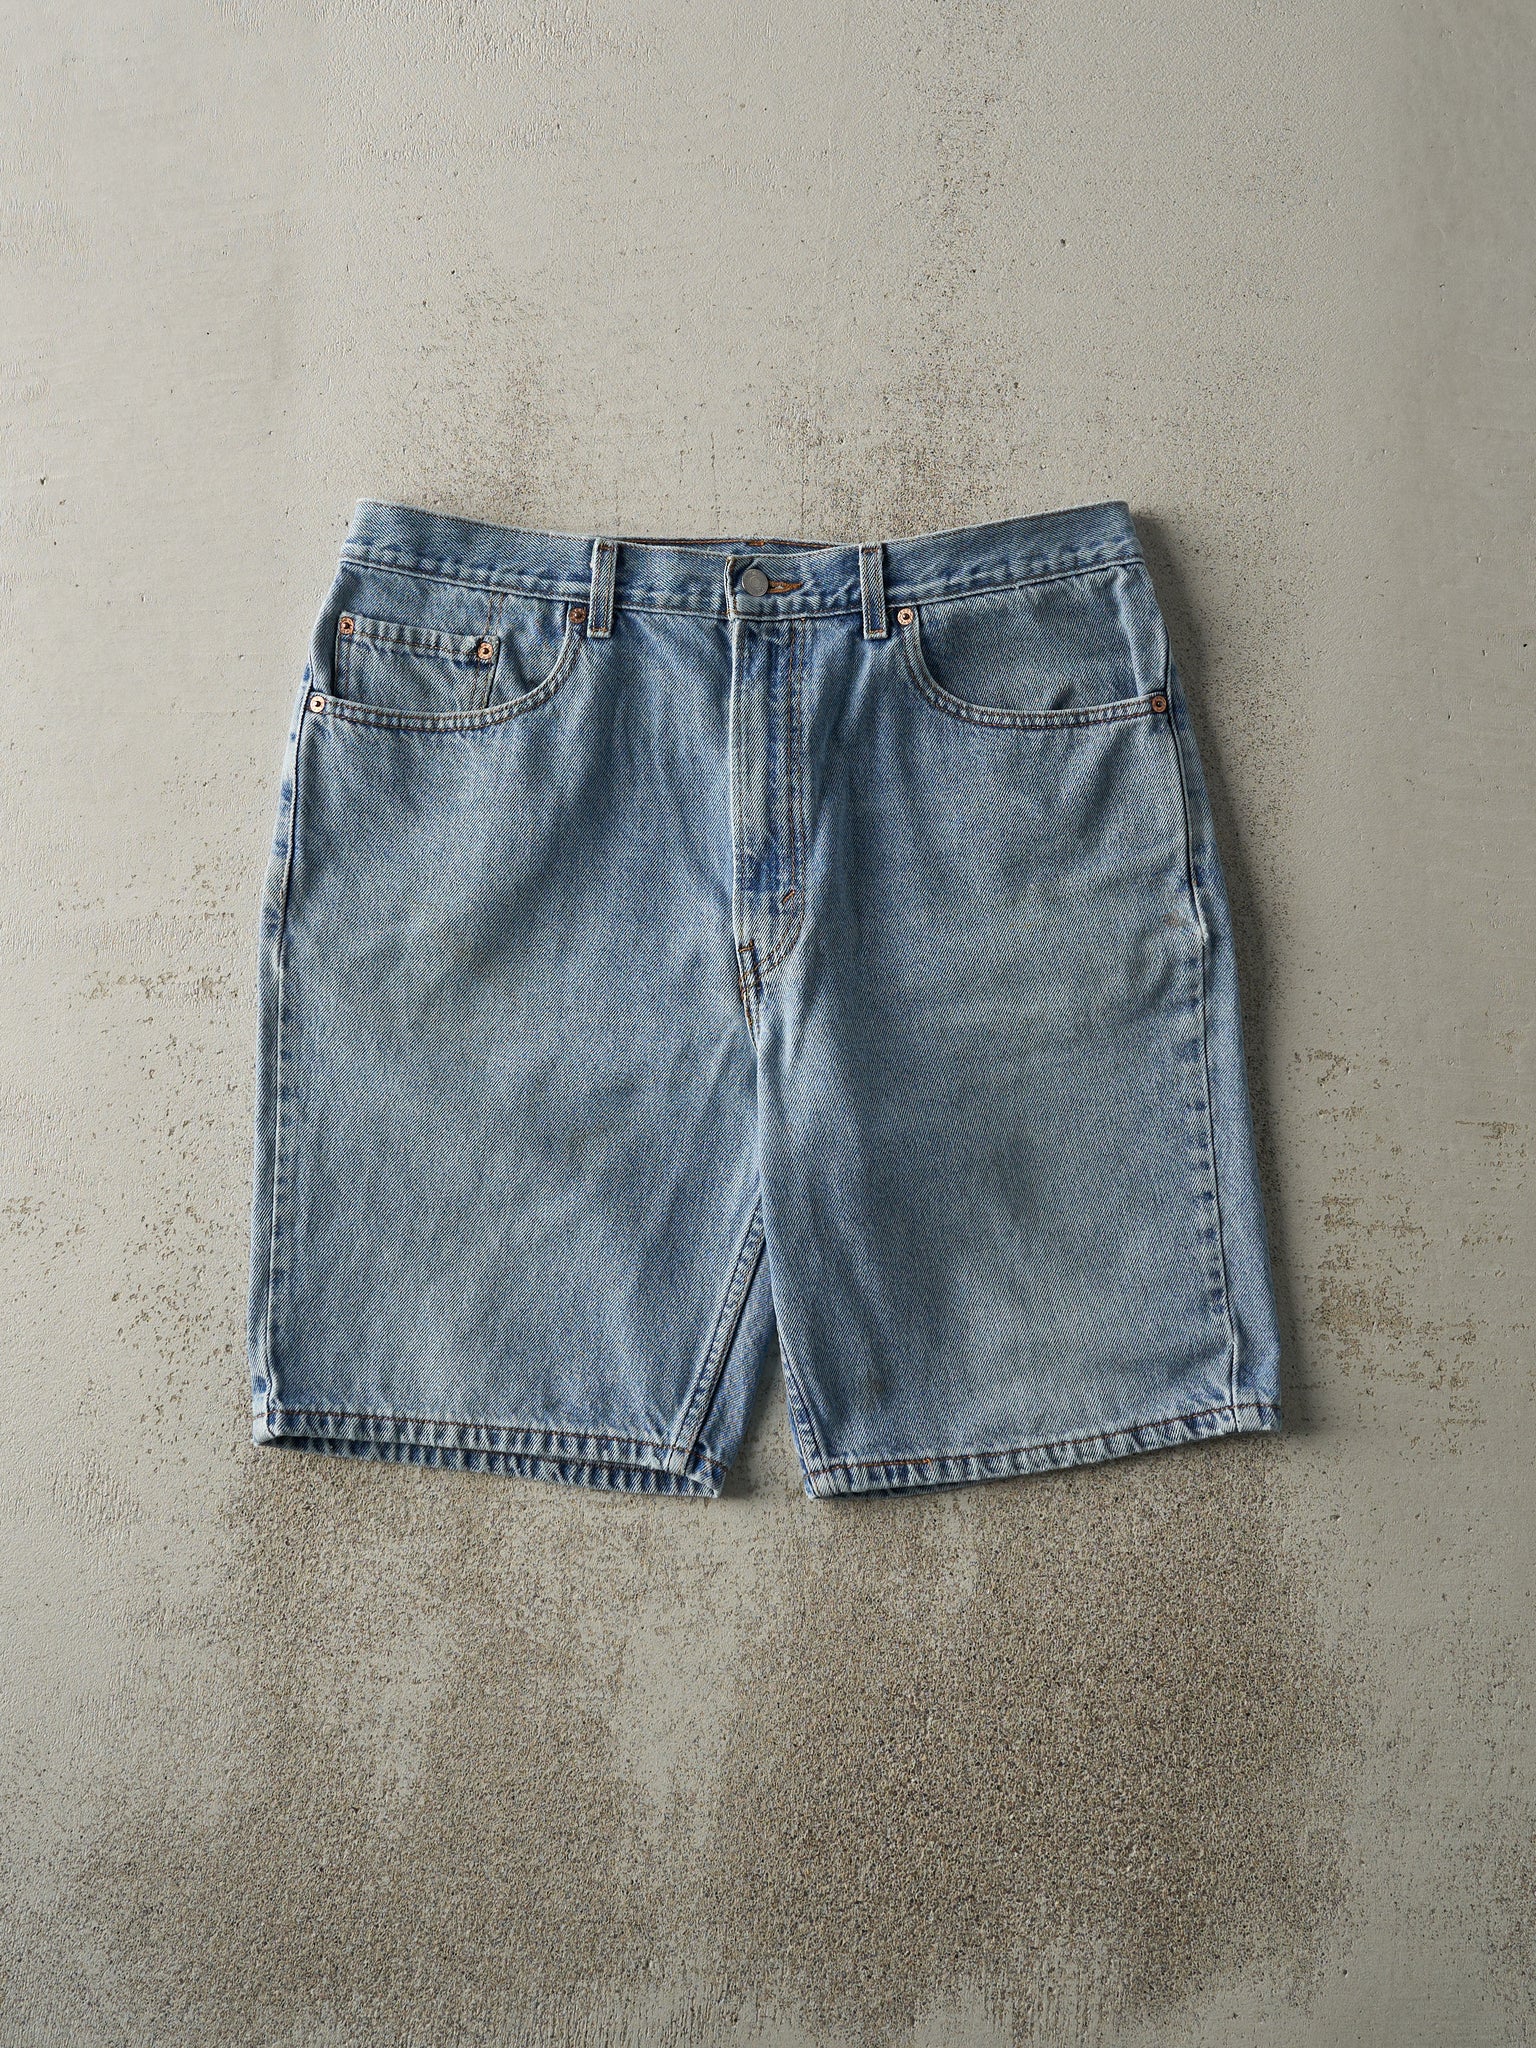 Vintage Y2K Light Wash Levi's 505 Jean Shorts (37x9.5)